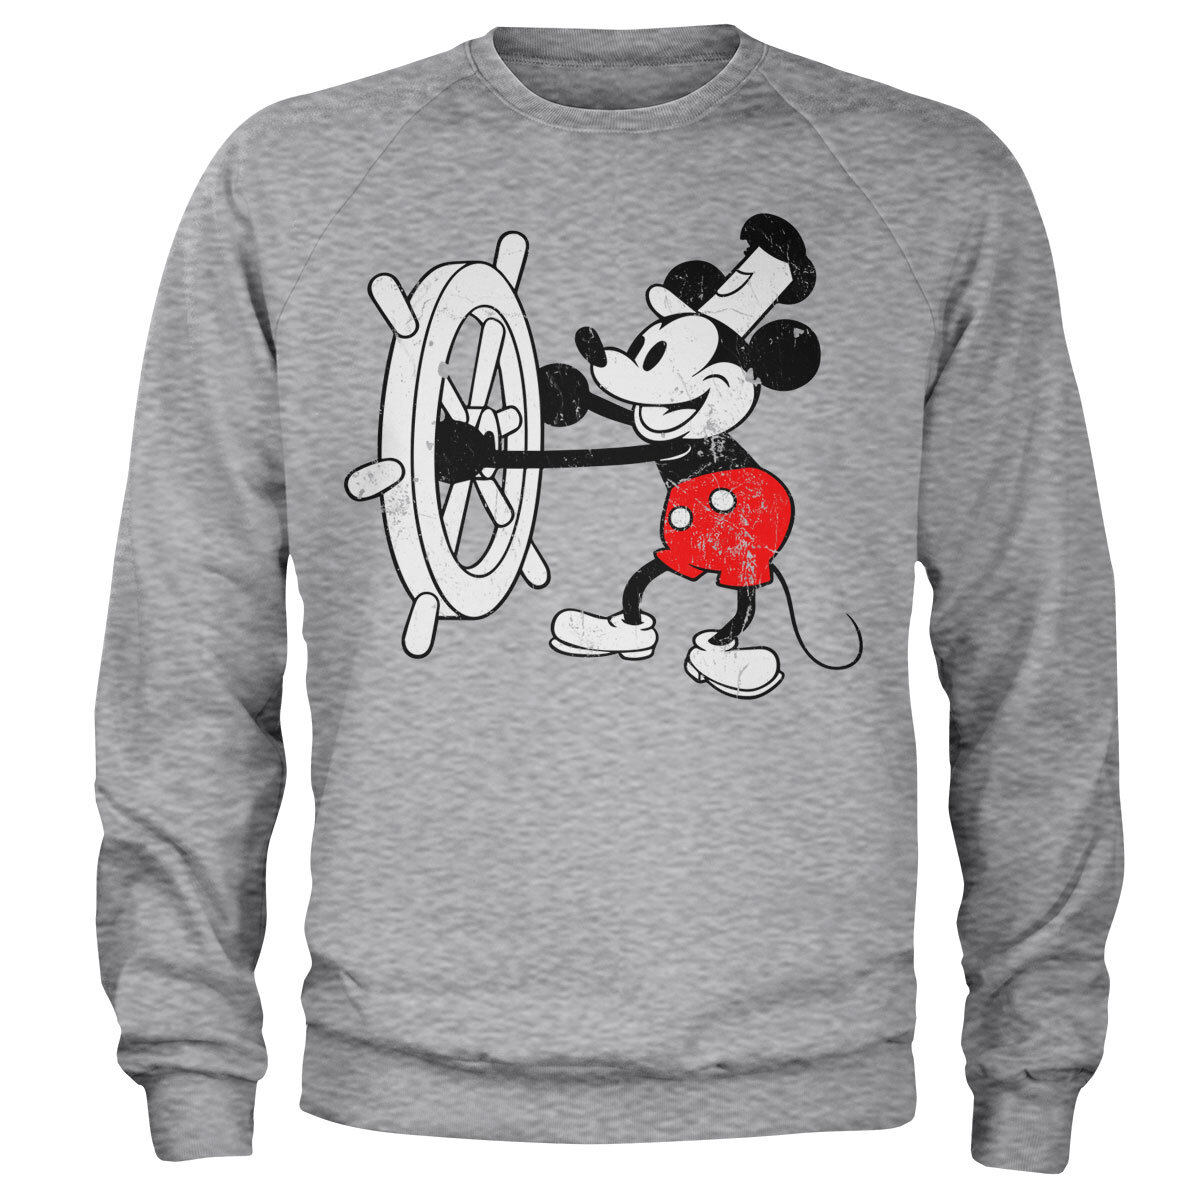 Steamboat Willie Sweatshirt